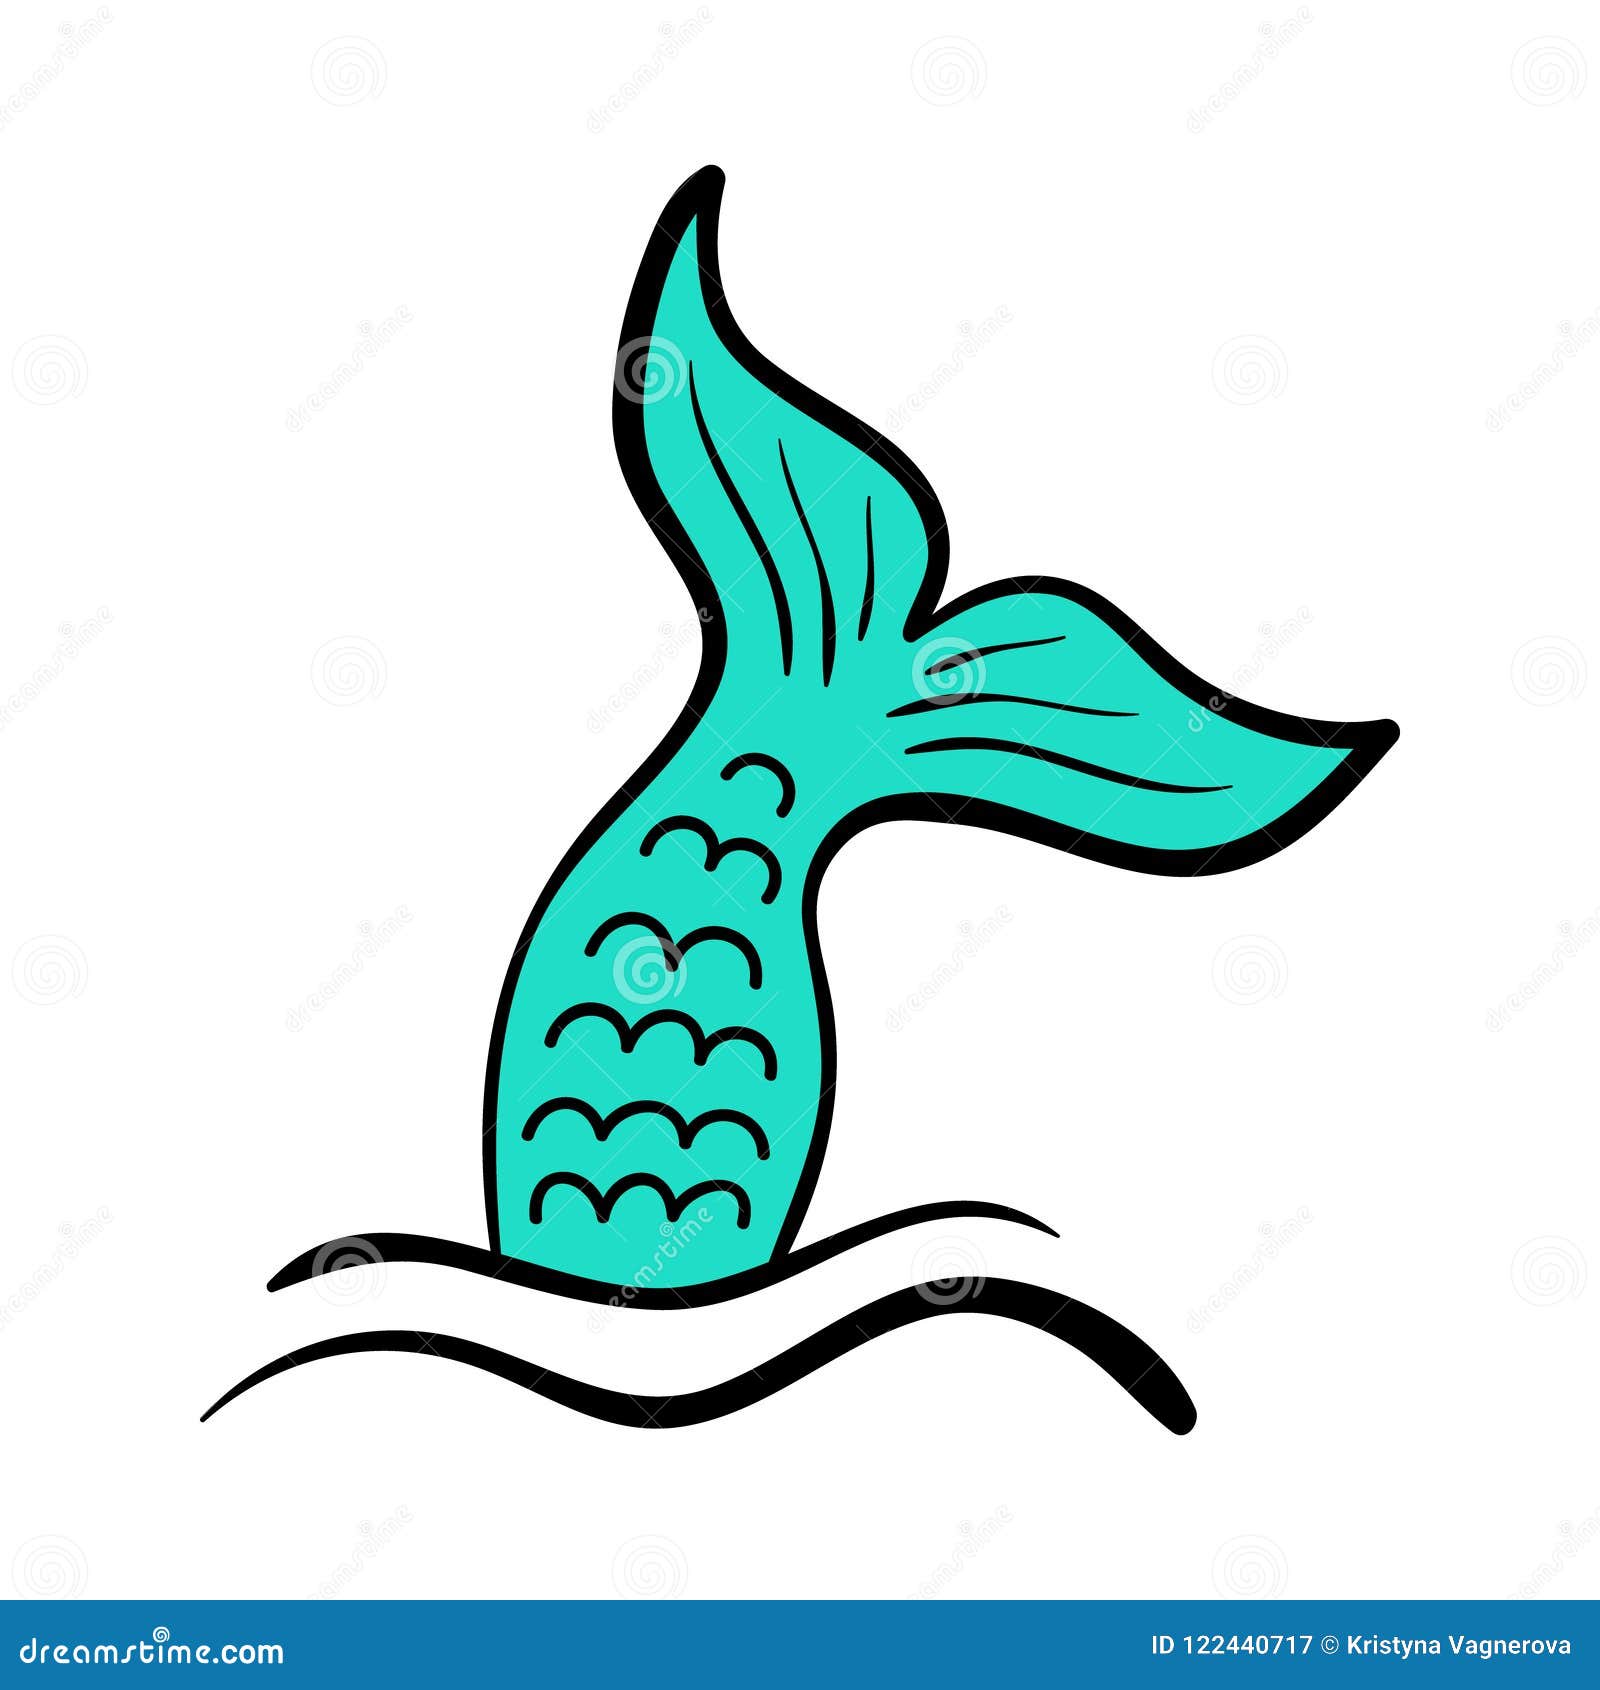 Mermaid Tail Vector Hand Drawn Illustration Stock Vector - Illustration